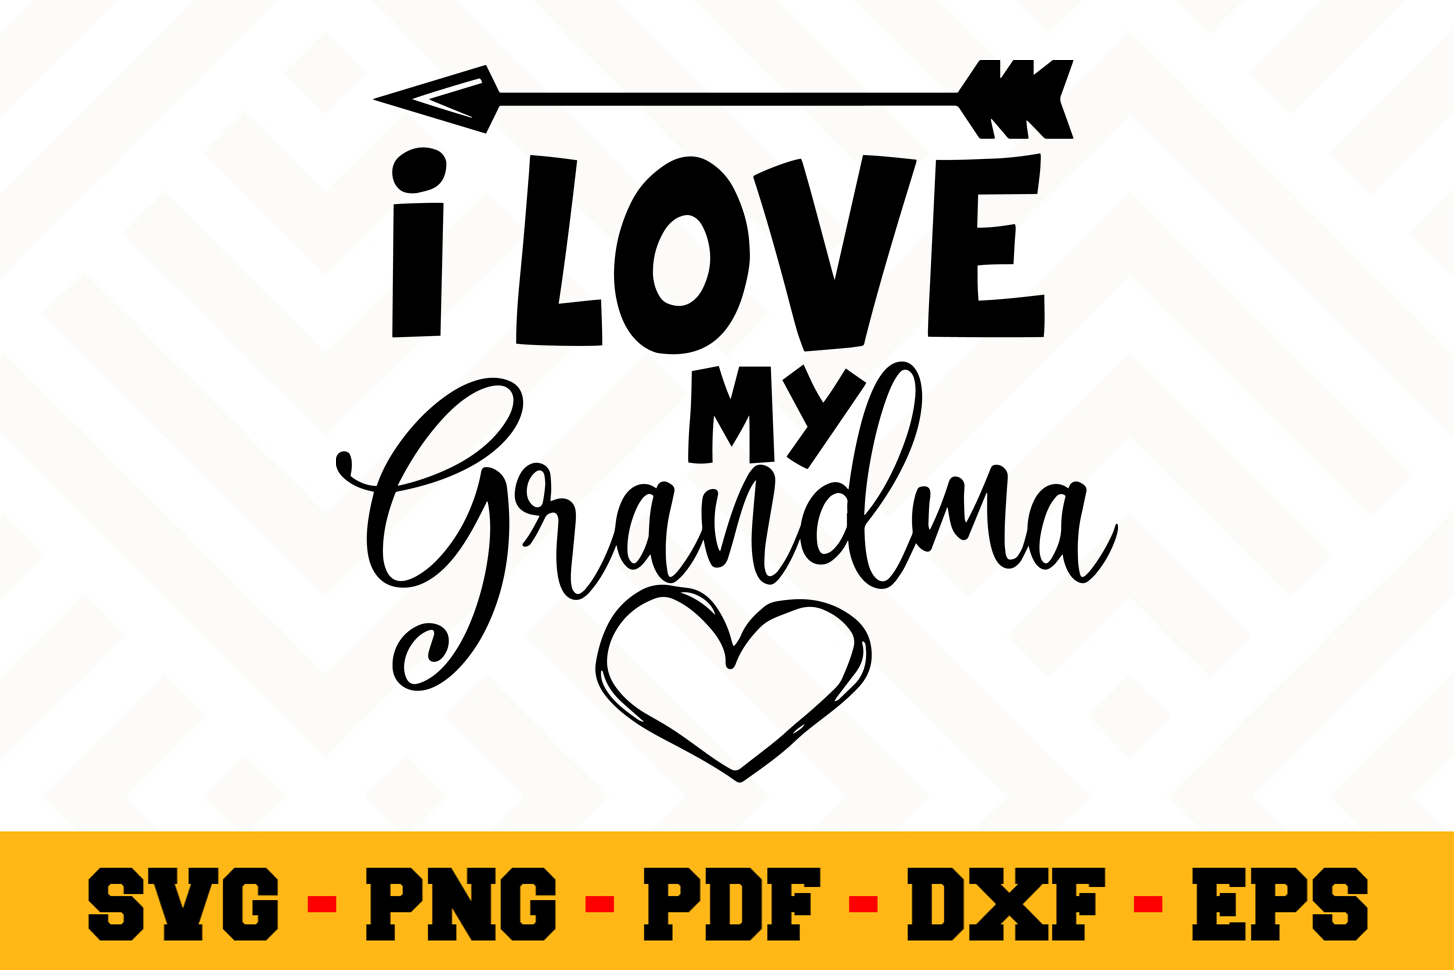 grandma clipart love grandma